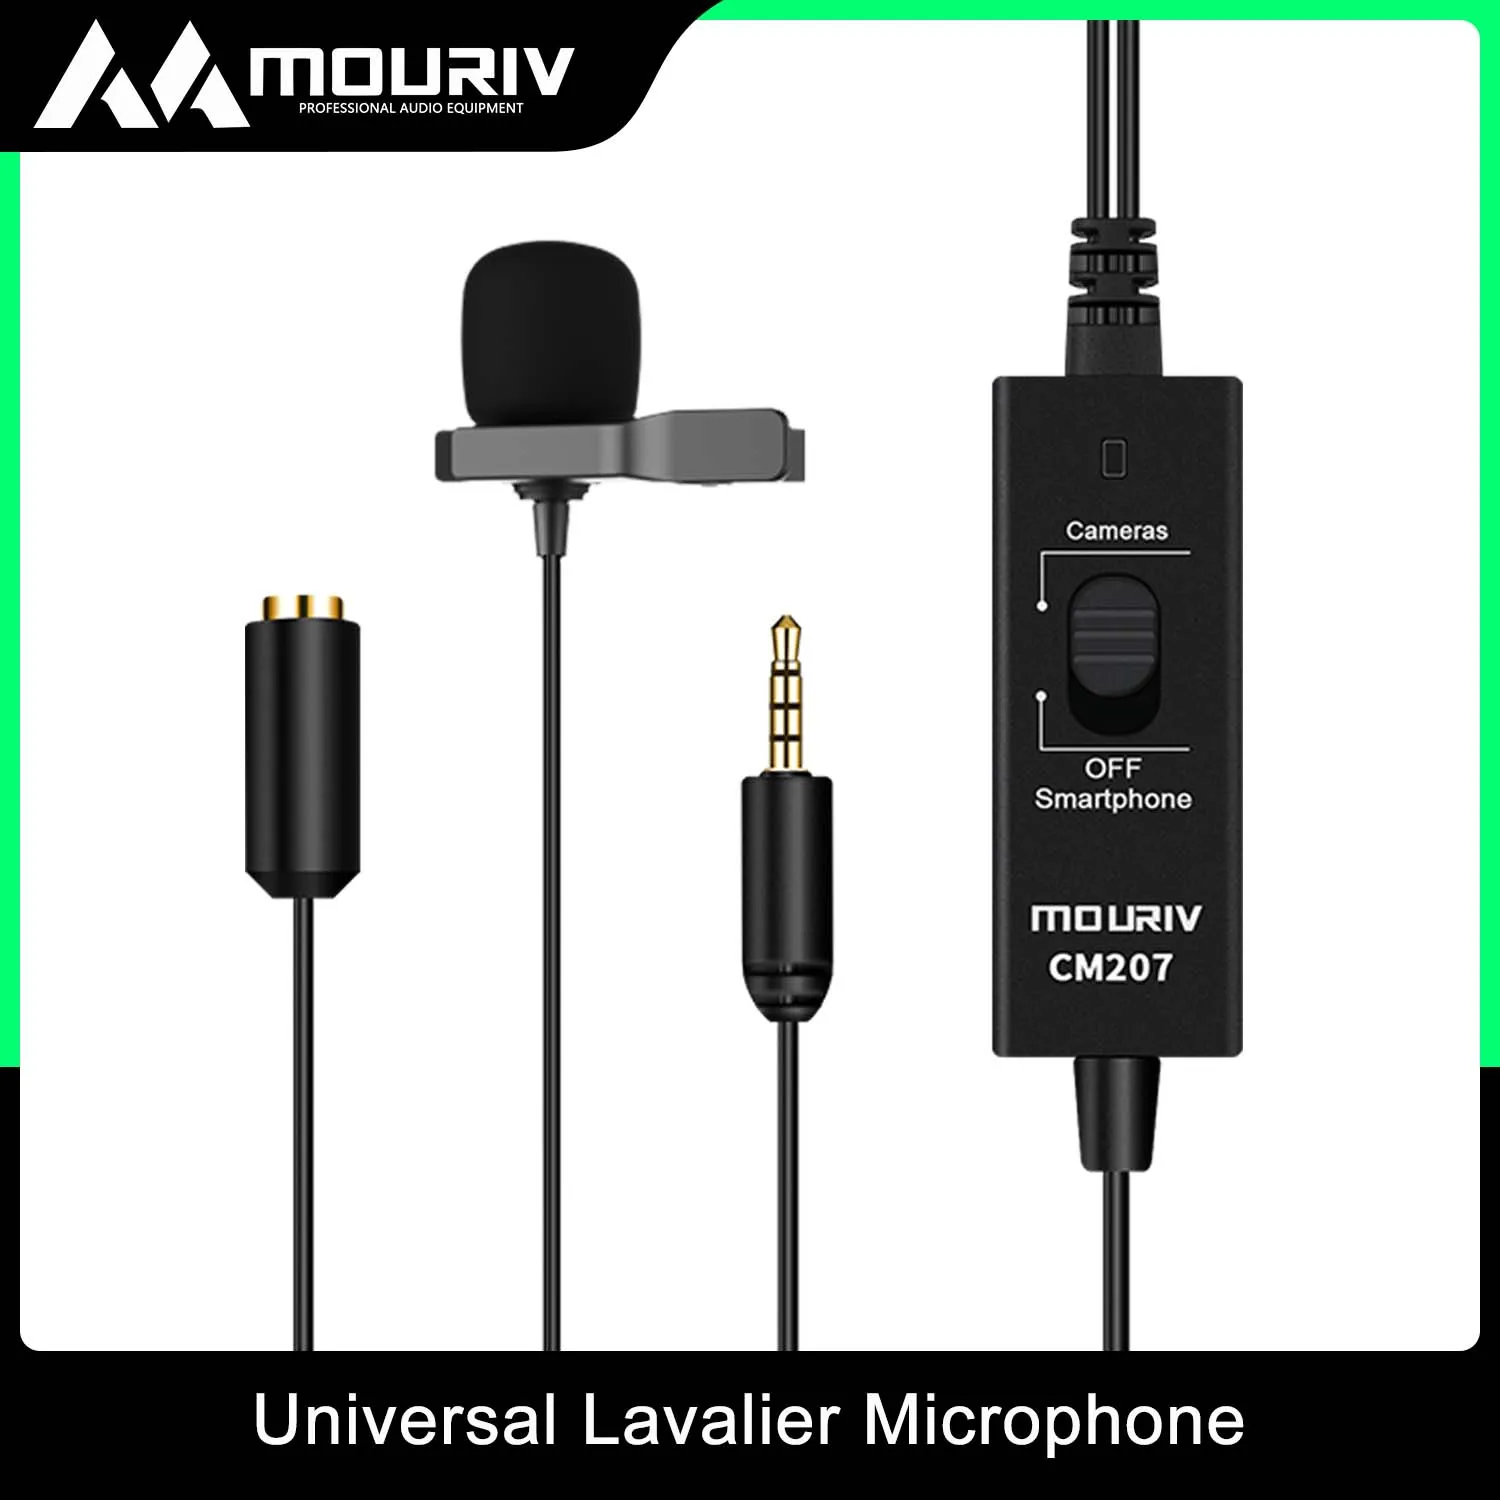 Universal Lavalier Microphone Monitoring Input Compatible with Laptop, Desktop,Smartphones,Cameras MOURIV CM207